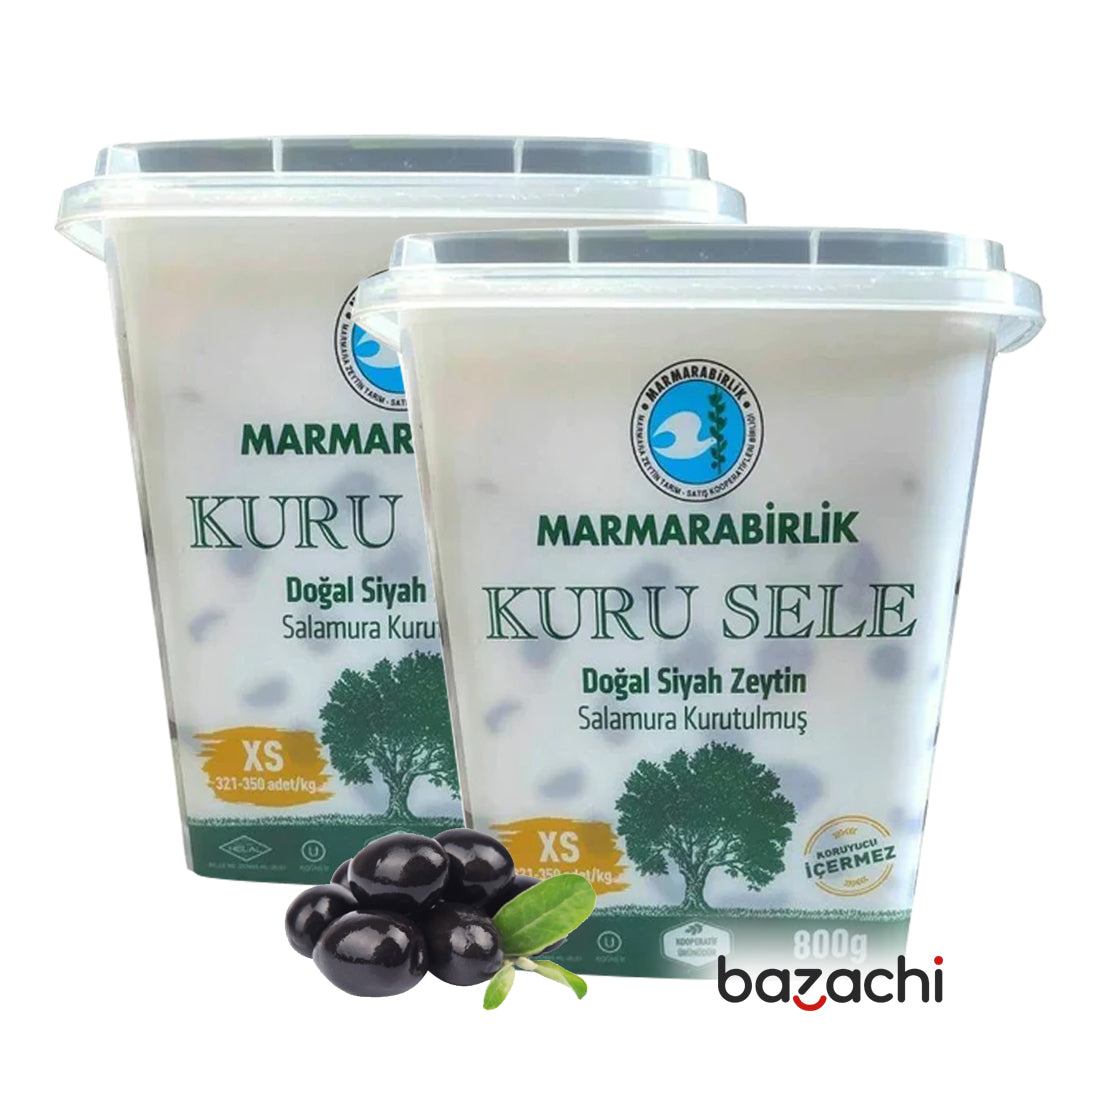 Marmarabirlik Kuru Sele Natural Black Olives Green 800g 321-350pcs XS